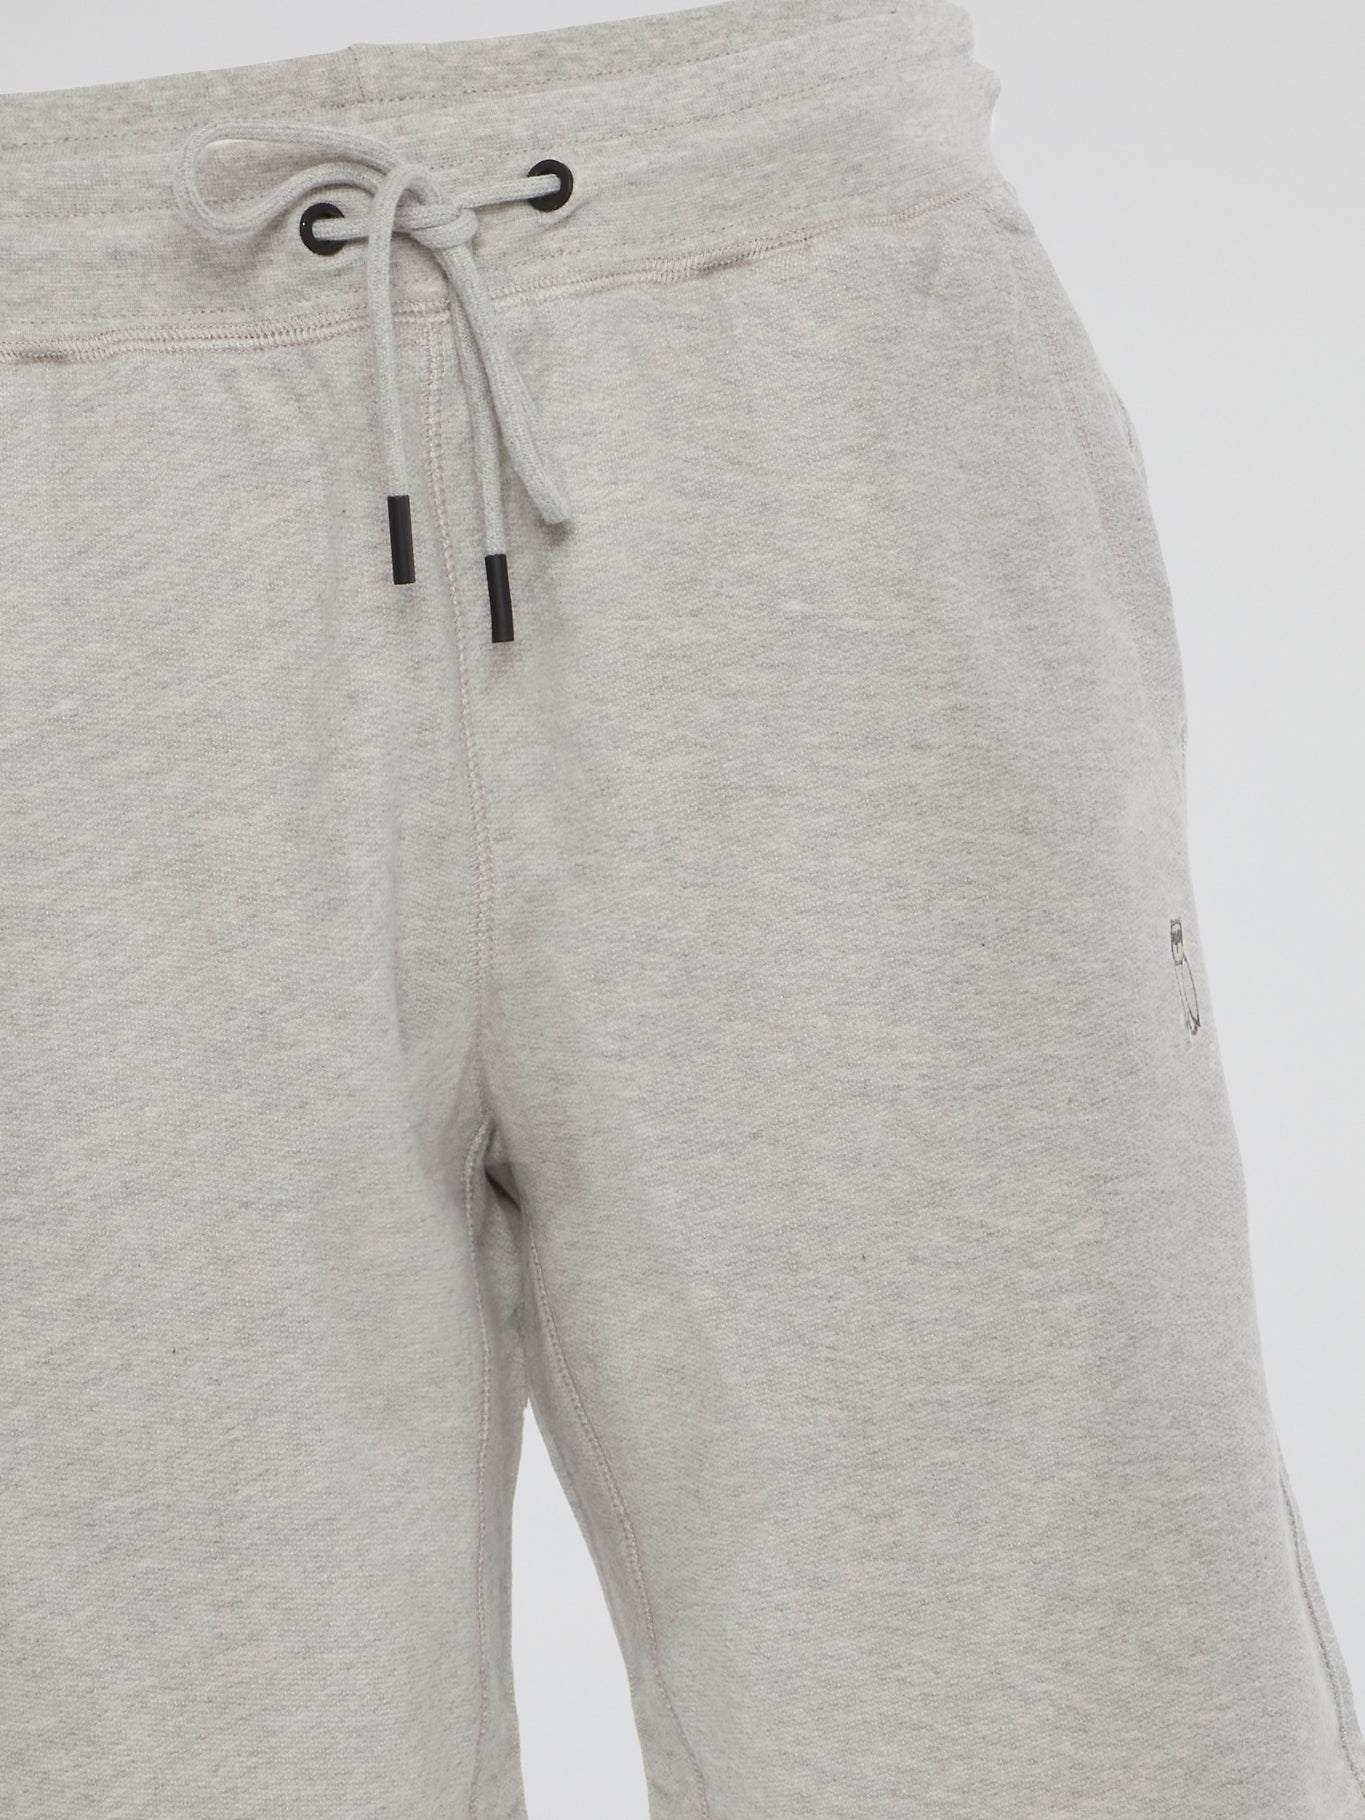 Essentials Sweat Global Grey – Store Shorts Maison-B-More